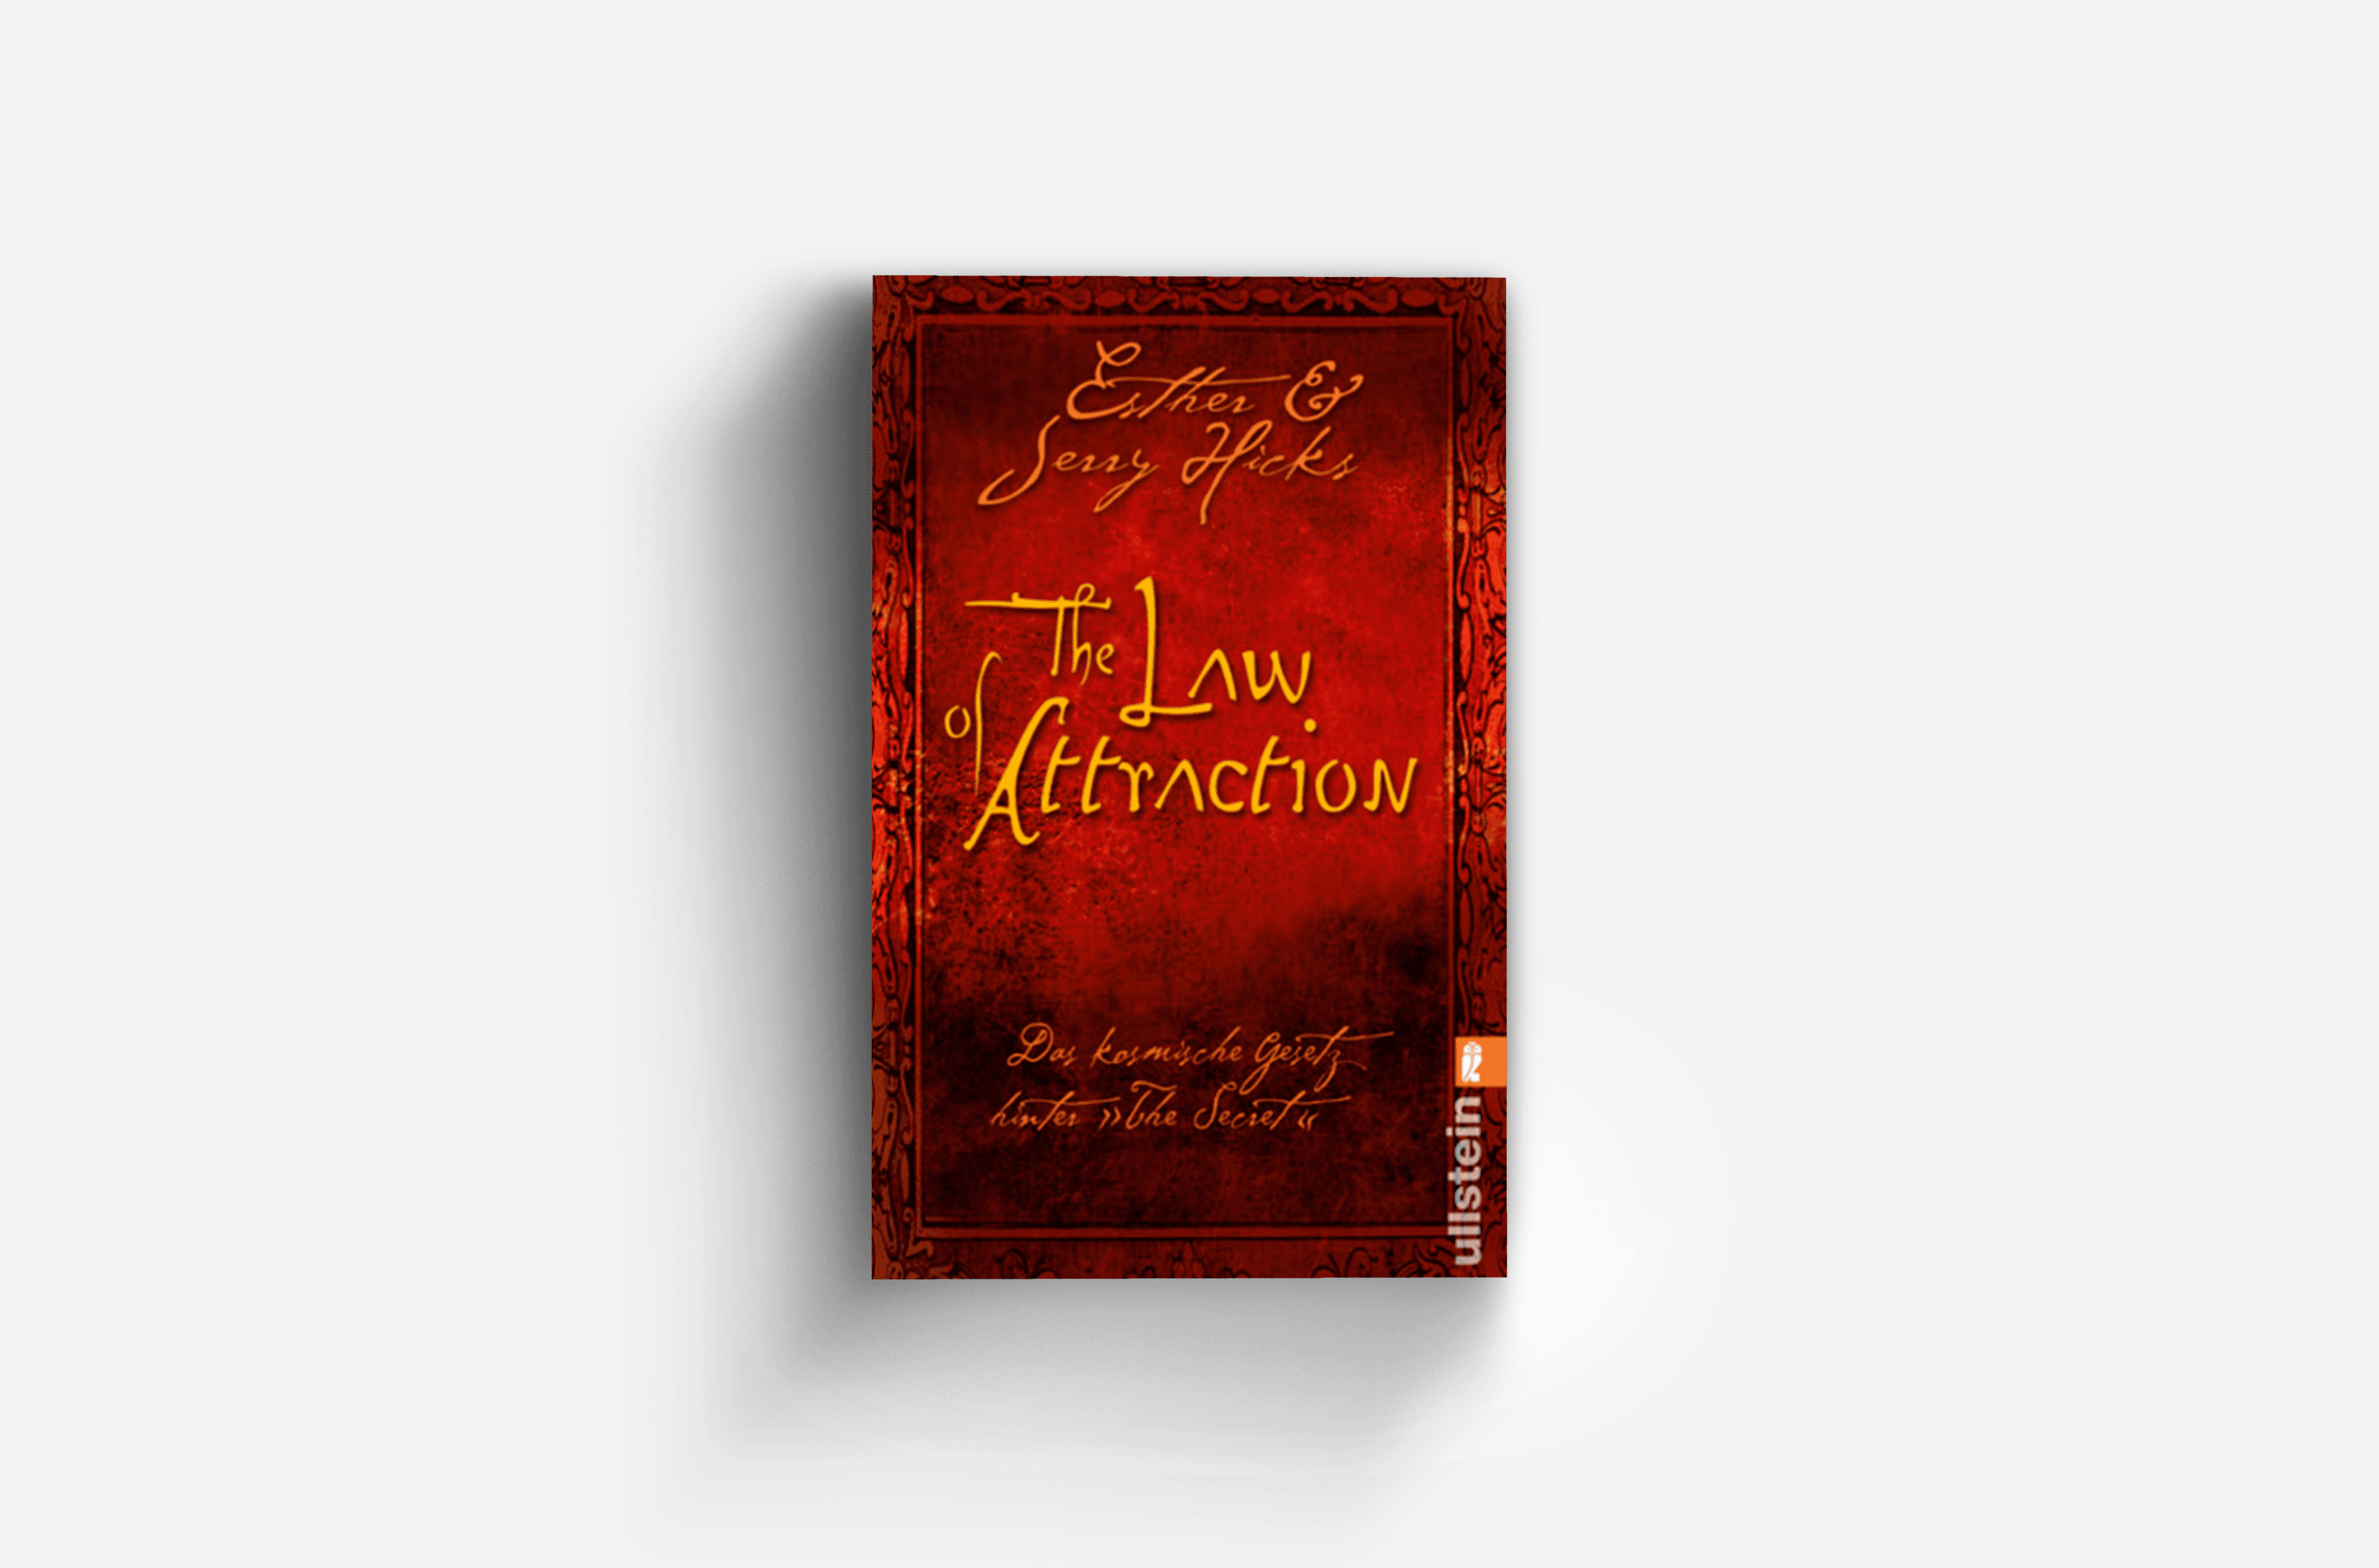 Buchcover von The Law of Attraction